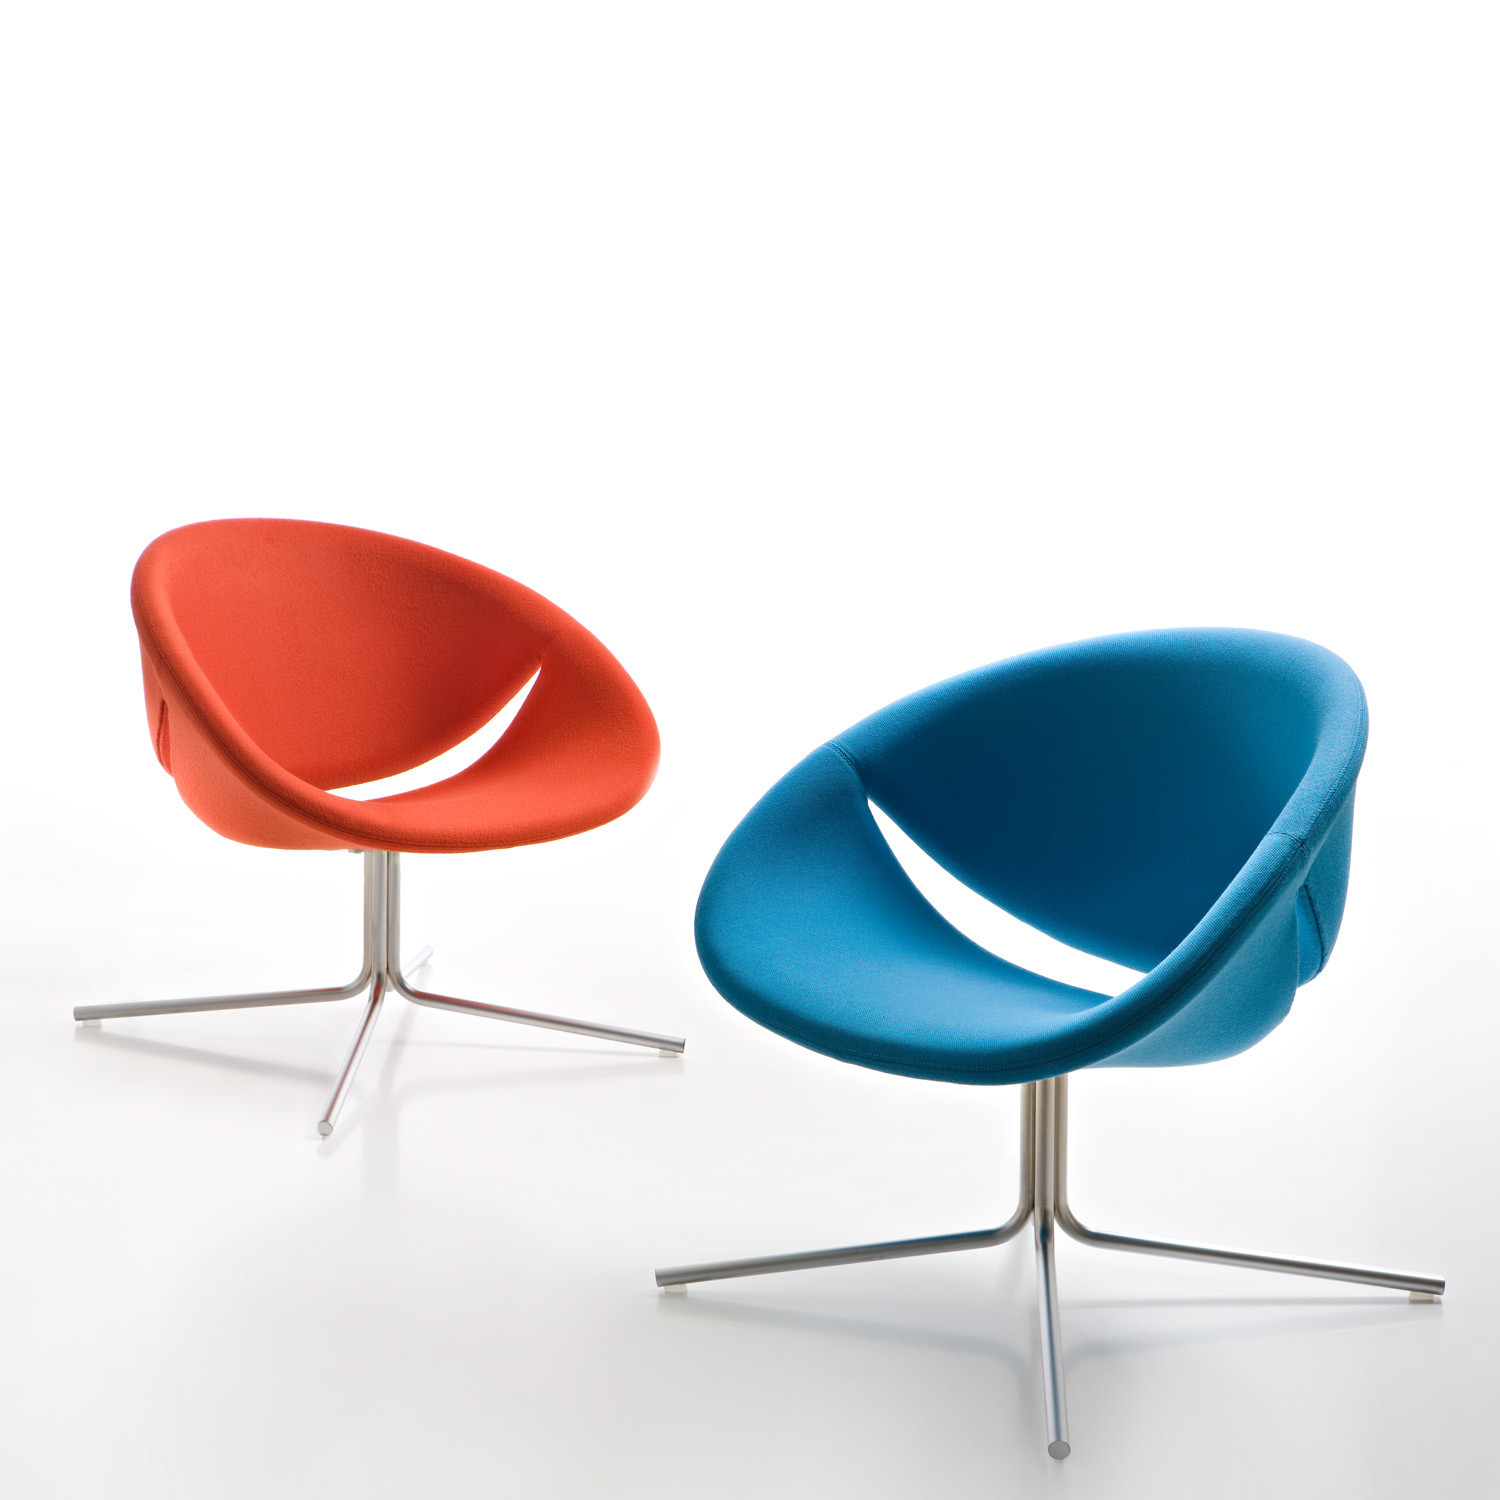 MaxdDesign So Happy Lounge Chair